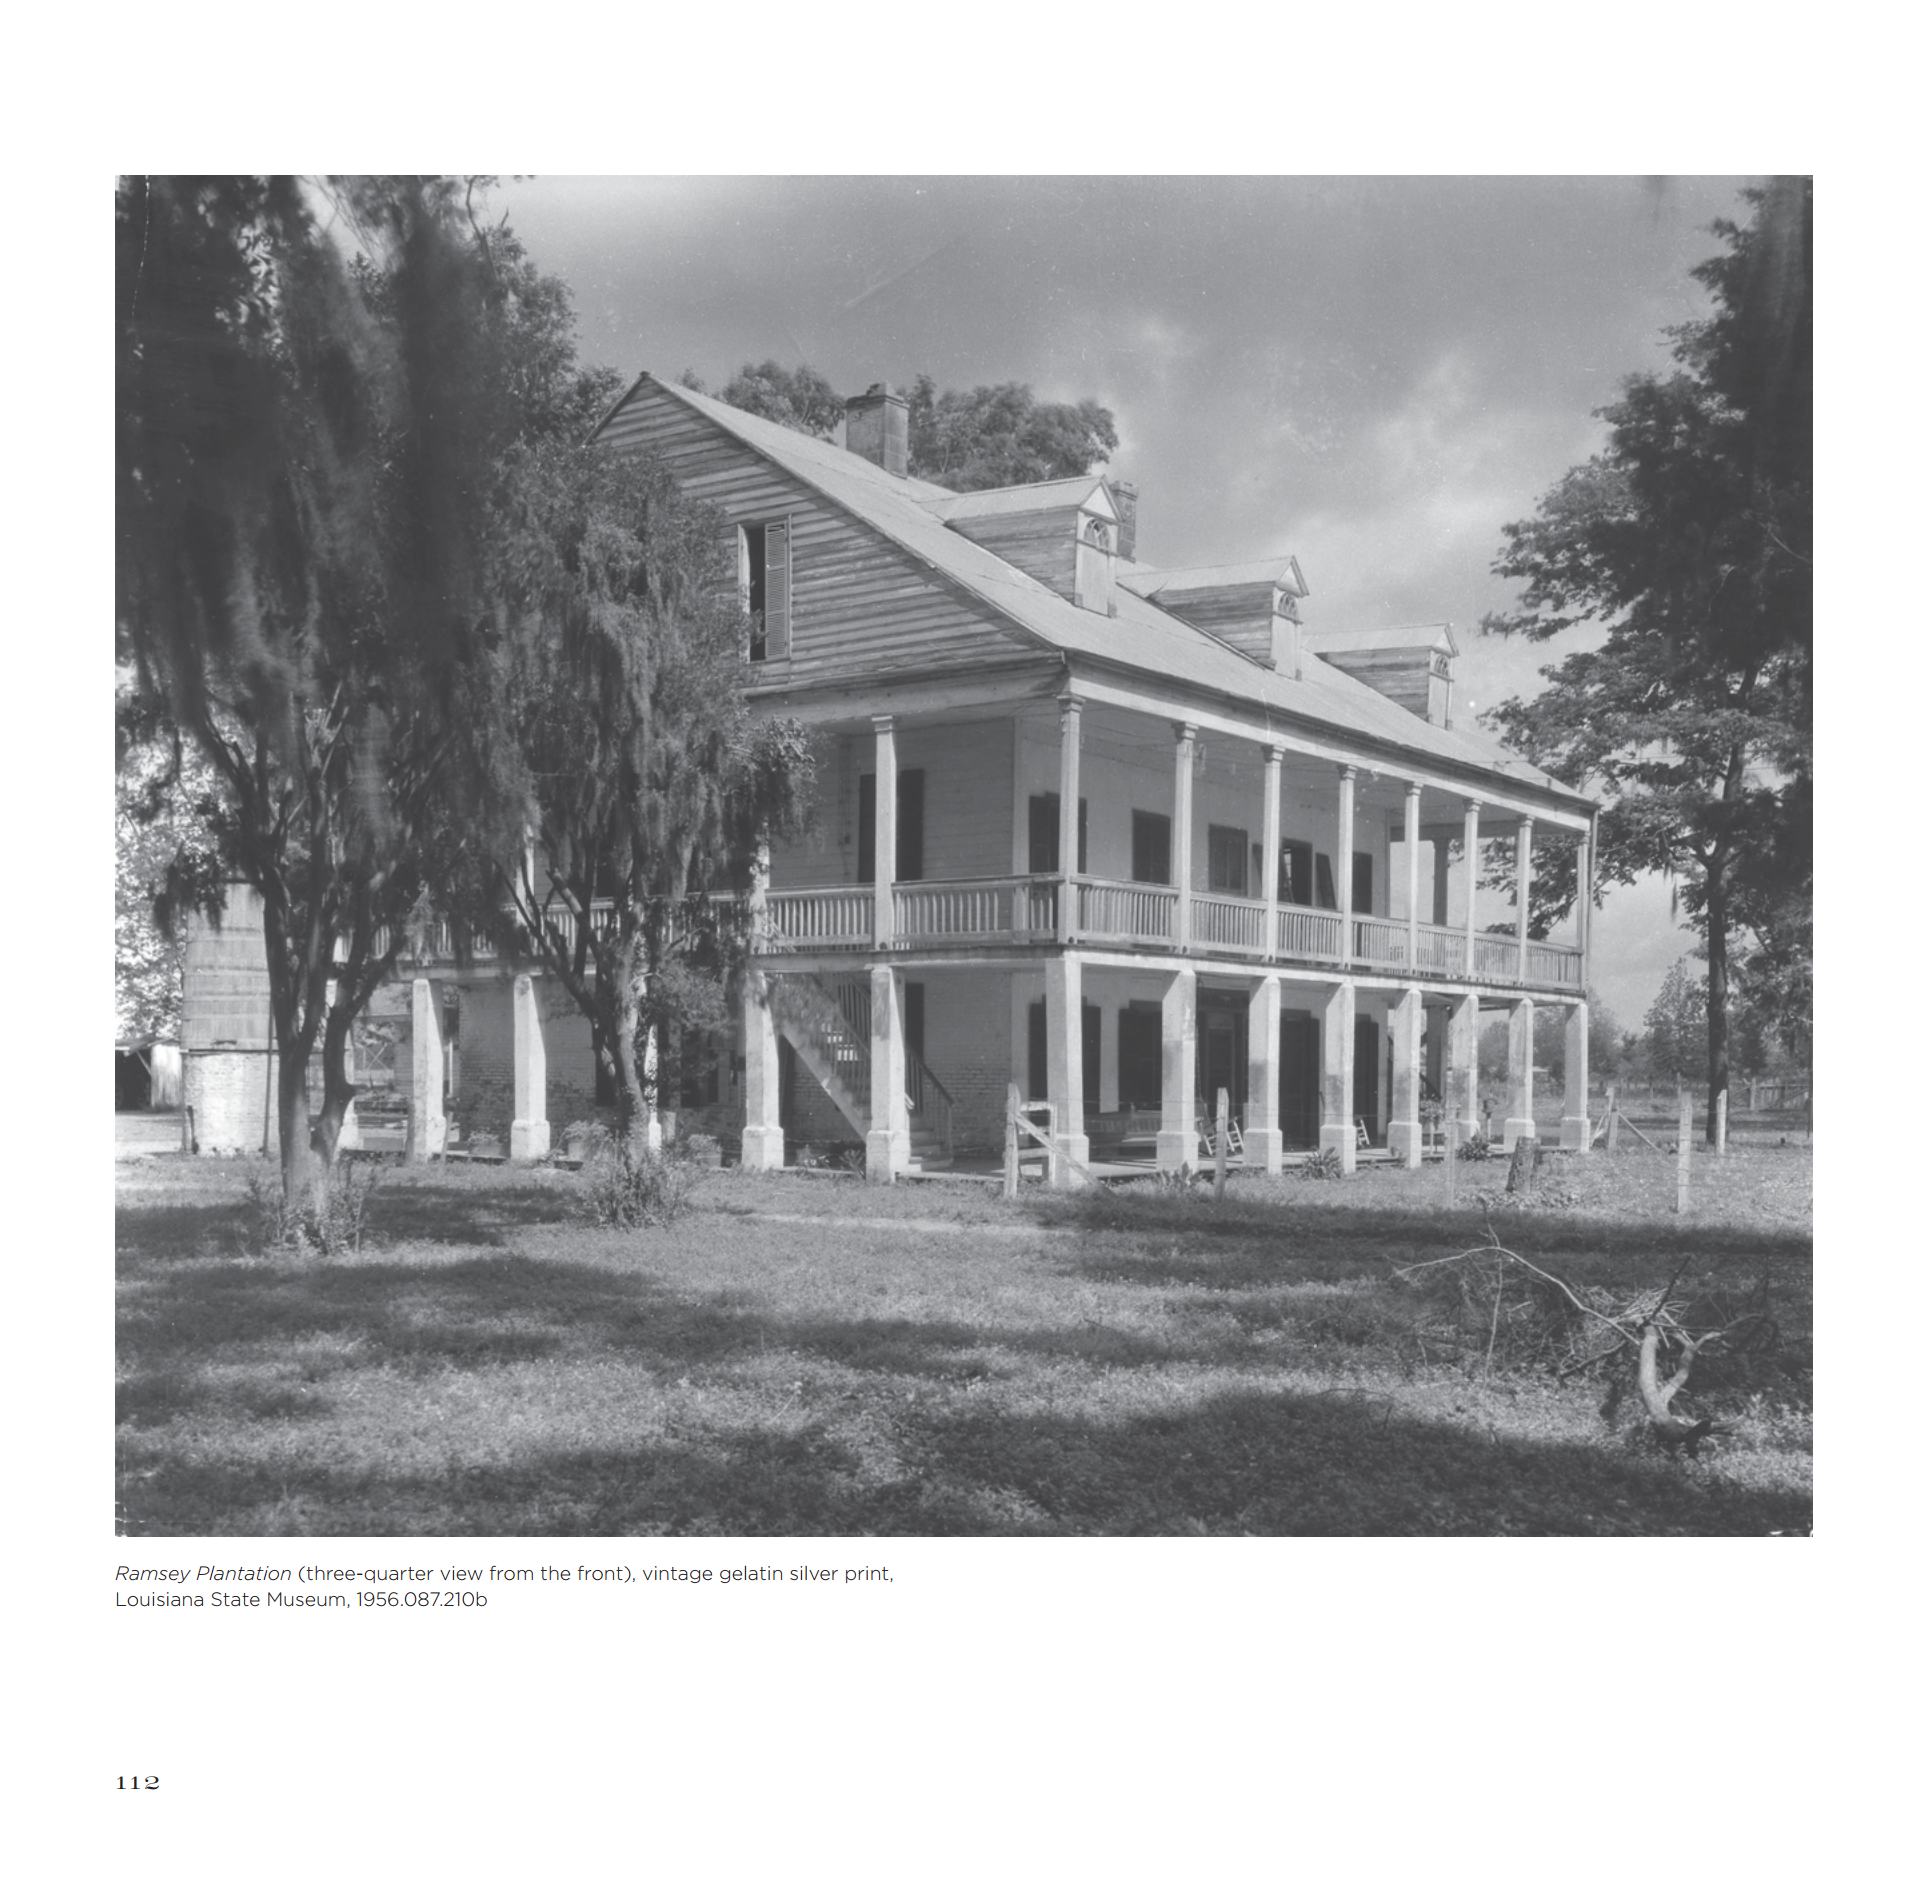 Robert W. Tebbs, Photographer to Architects: Louisiana Plantations in 1926 / Richard Anthony Lewis ; foreword by Robert J. Cangelosi, Jr. — Baton Rouge, Louisiana : Louisiana State University Press, 2011